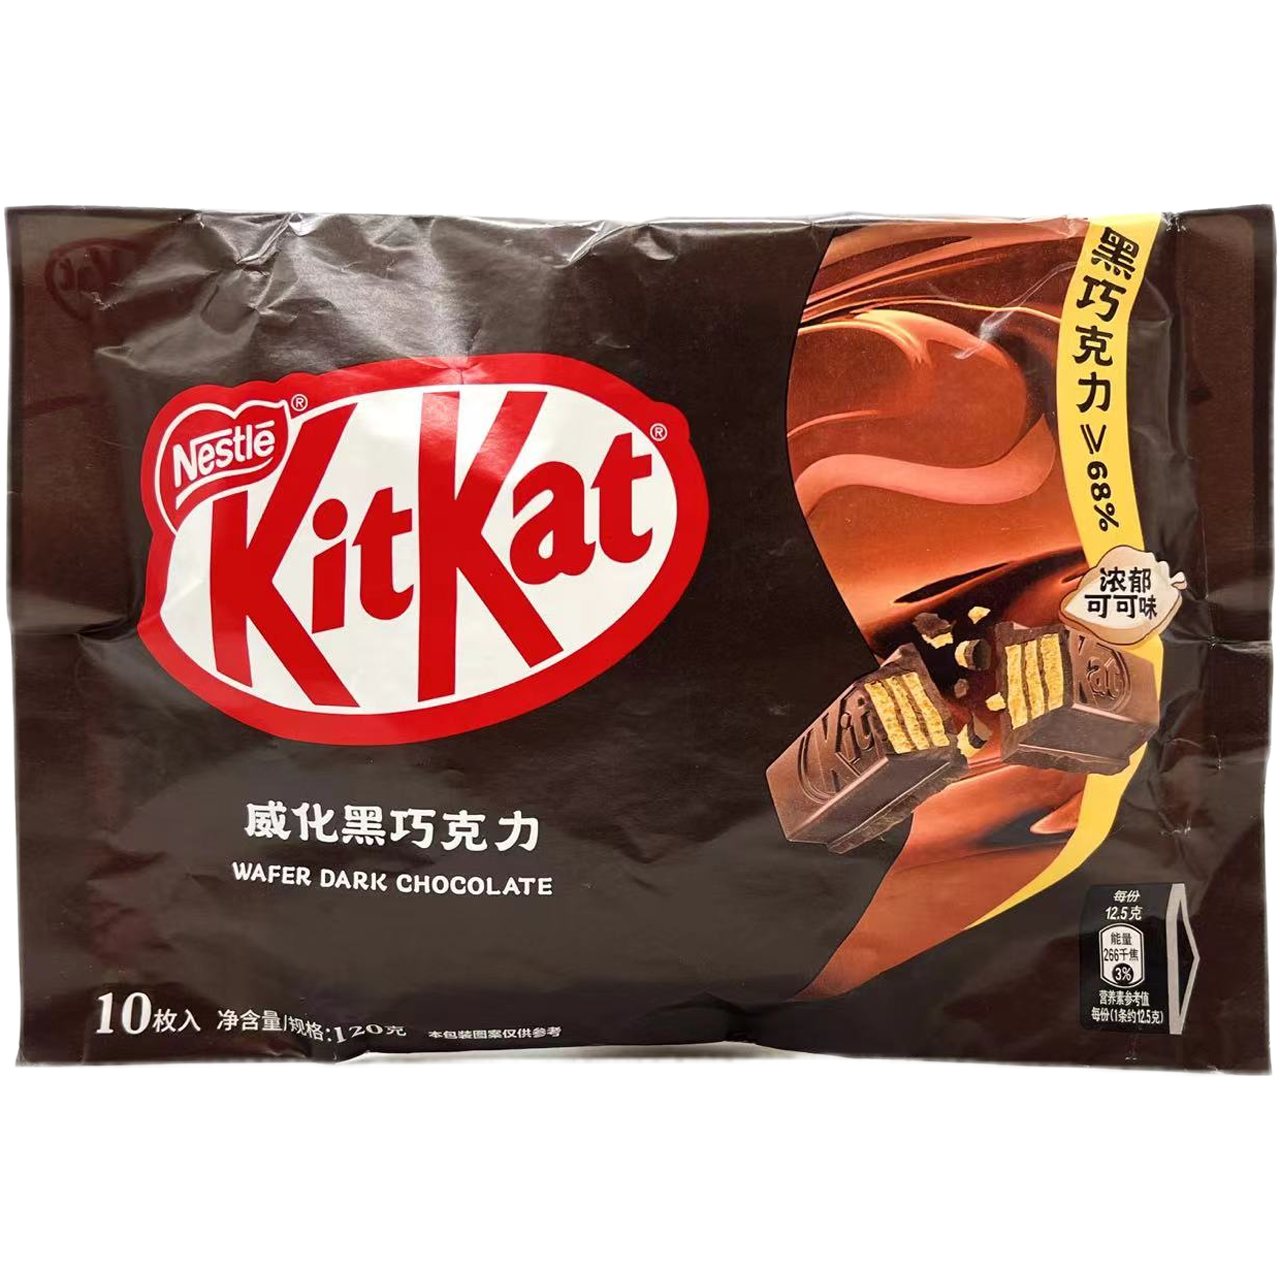 KitKat雀巢奇巧威化榛子味牛奶巧克力草莓味白巧克力38g-115g袋装 - 图3